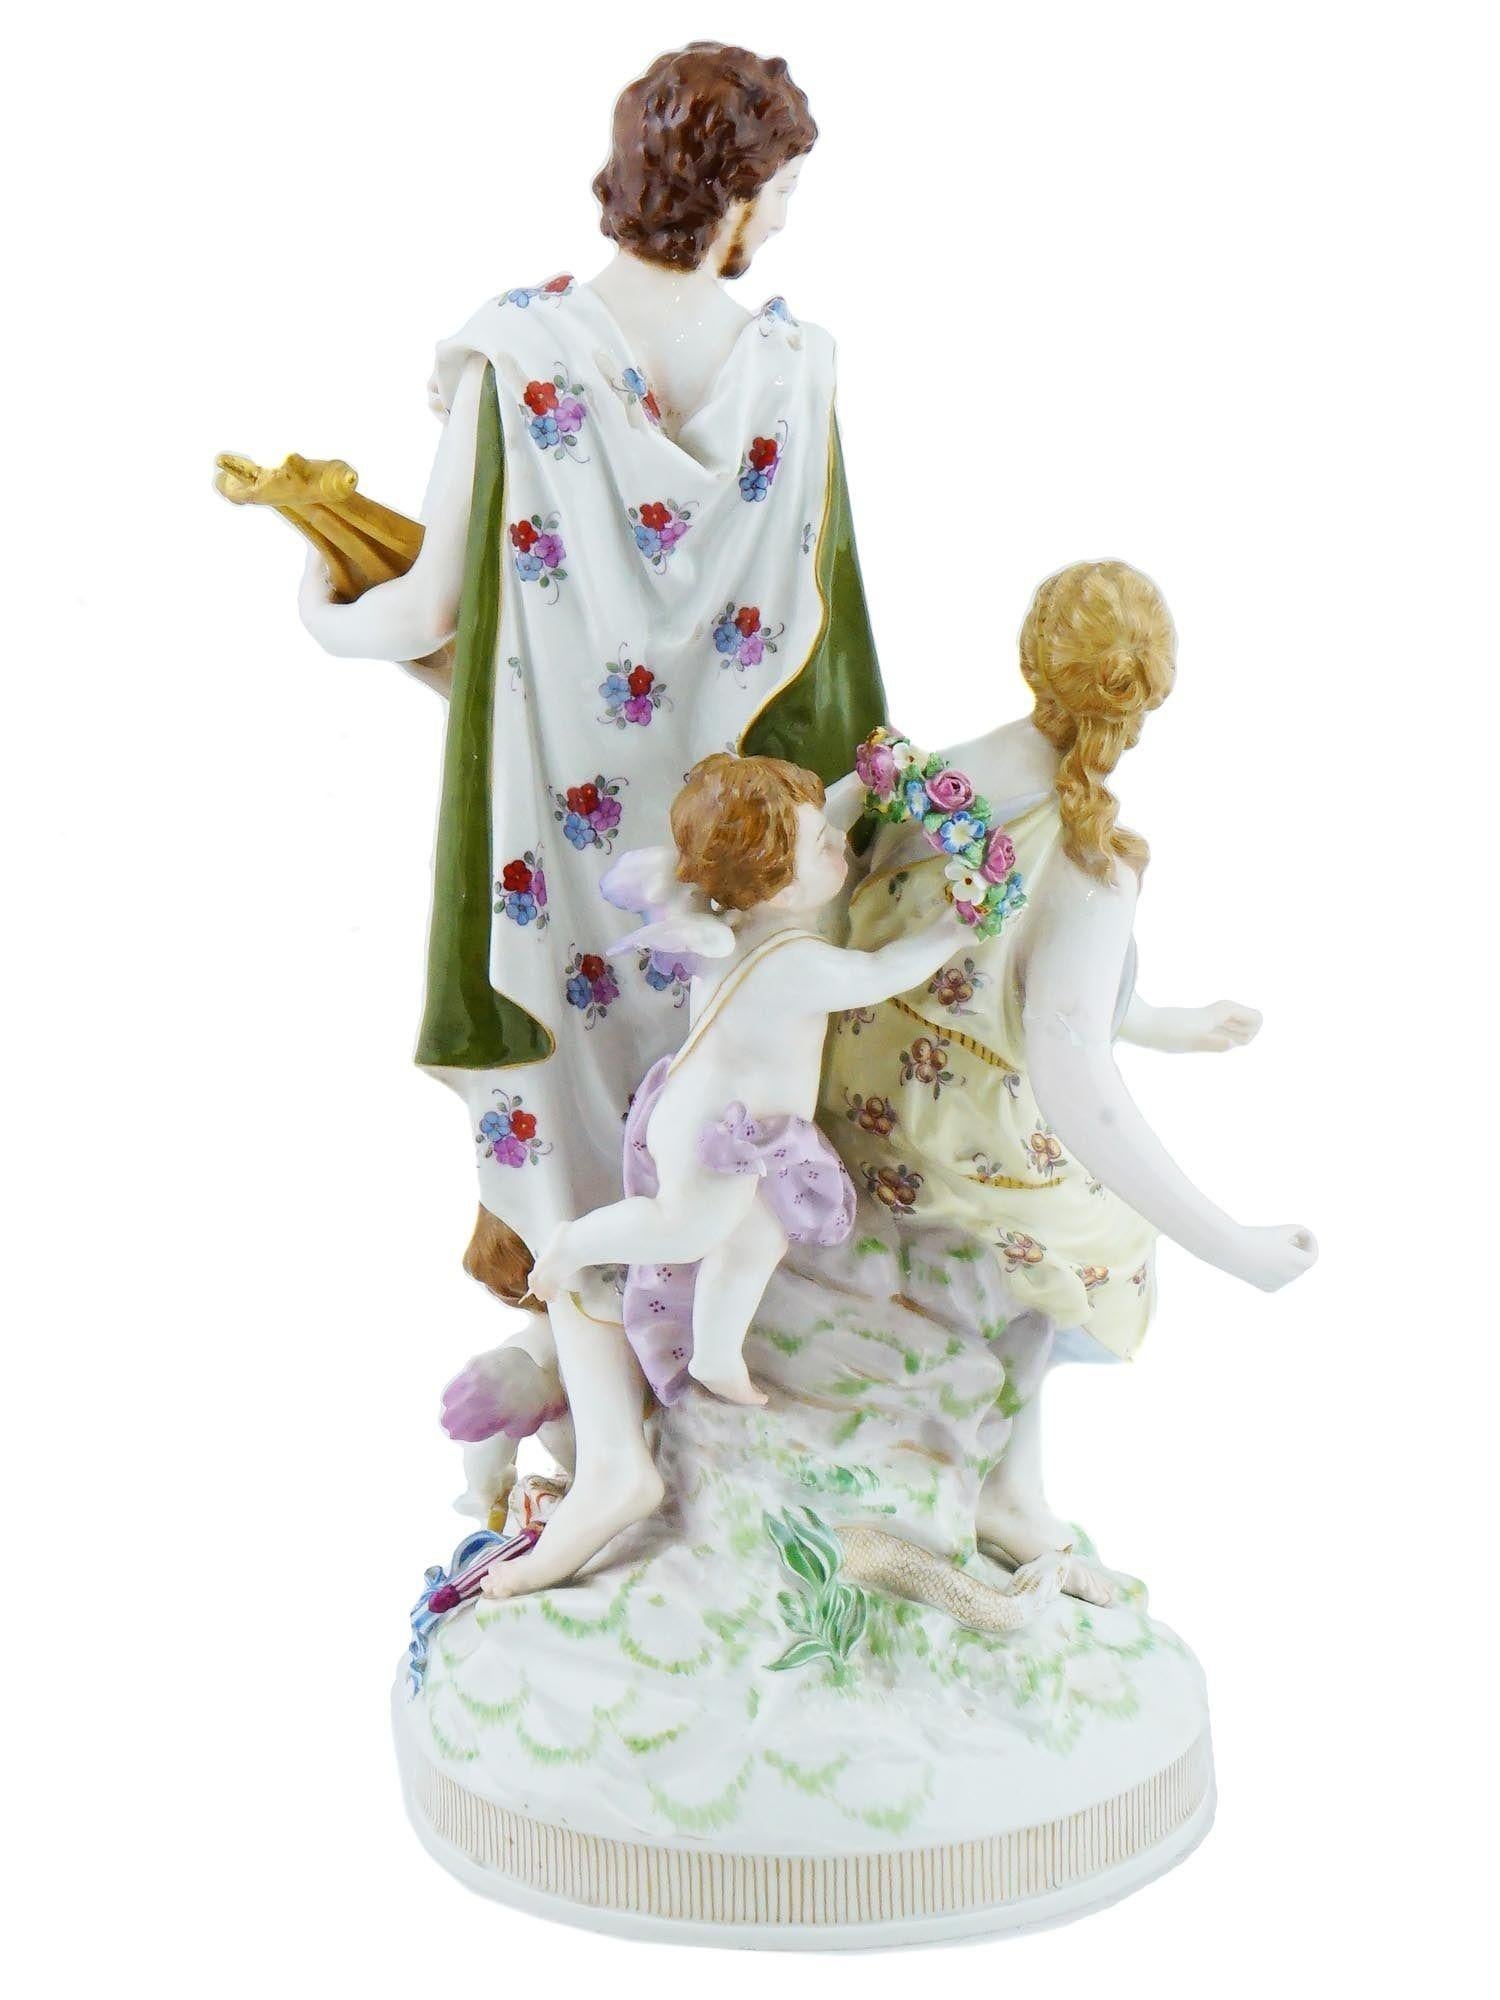 KPM Porcelain Figurine Depicting Orpheus and Eurydice For Sale 1